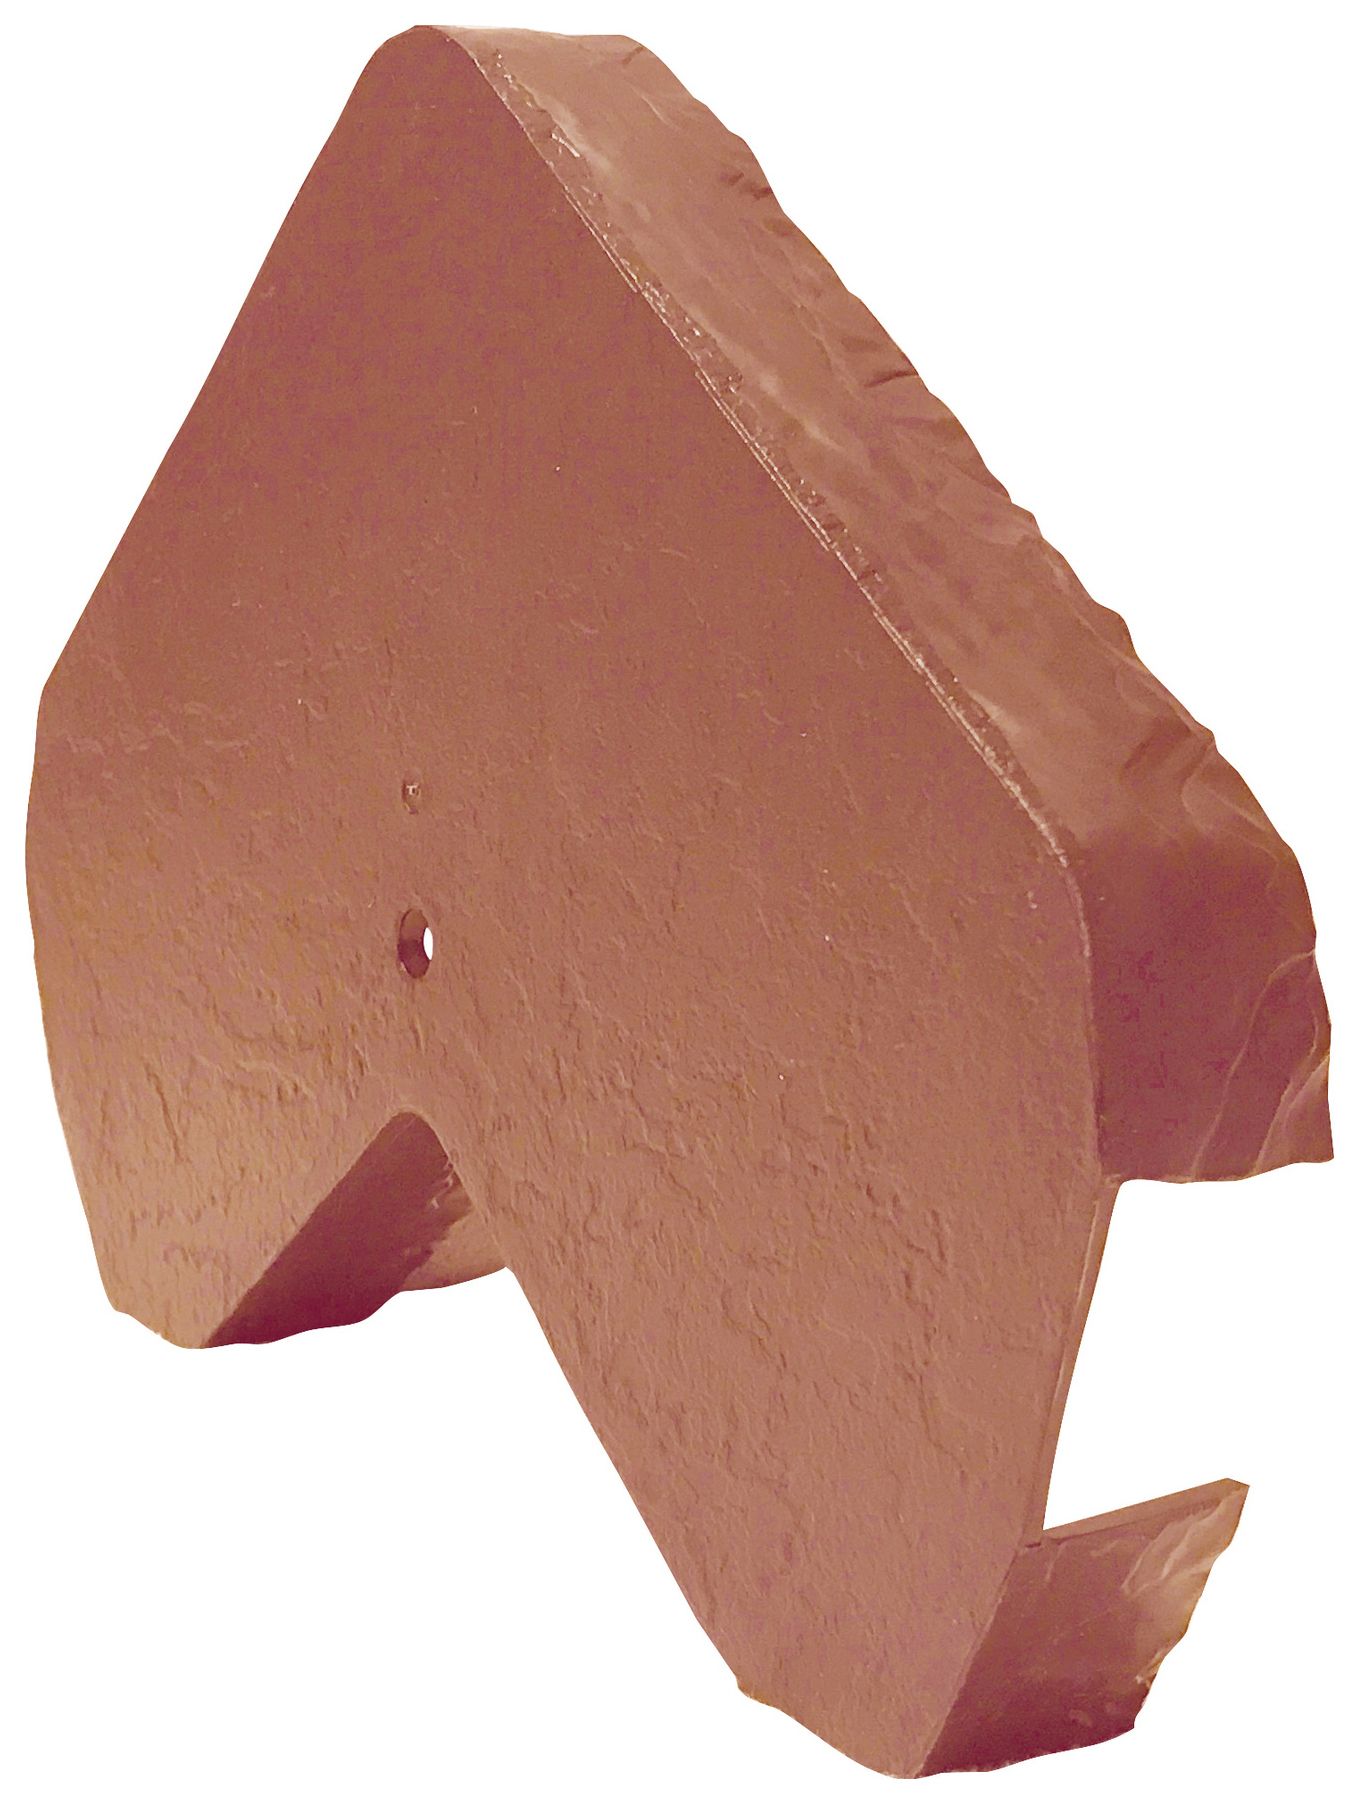 Envirotile Plastic Lightweight Terracotta Gable End Cap - 28 x 325 x 6mm